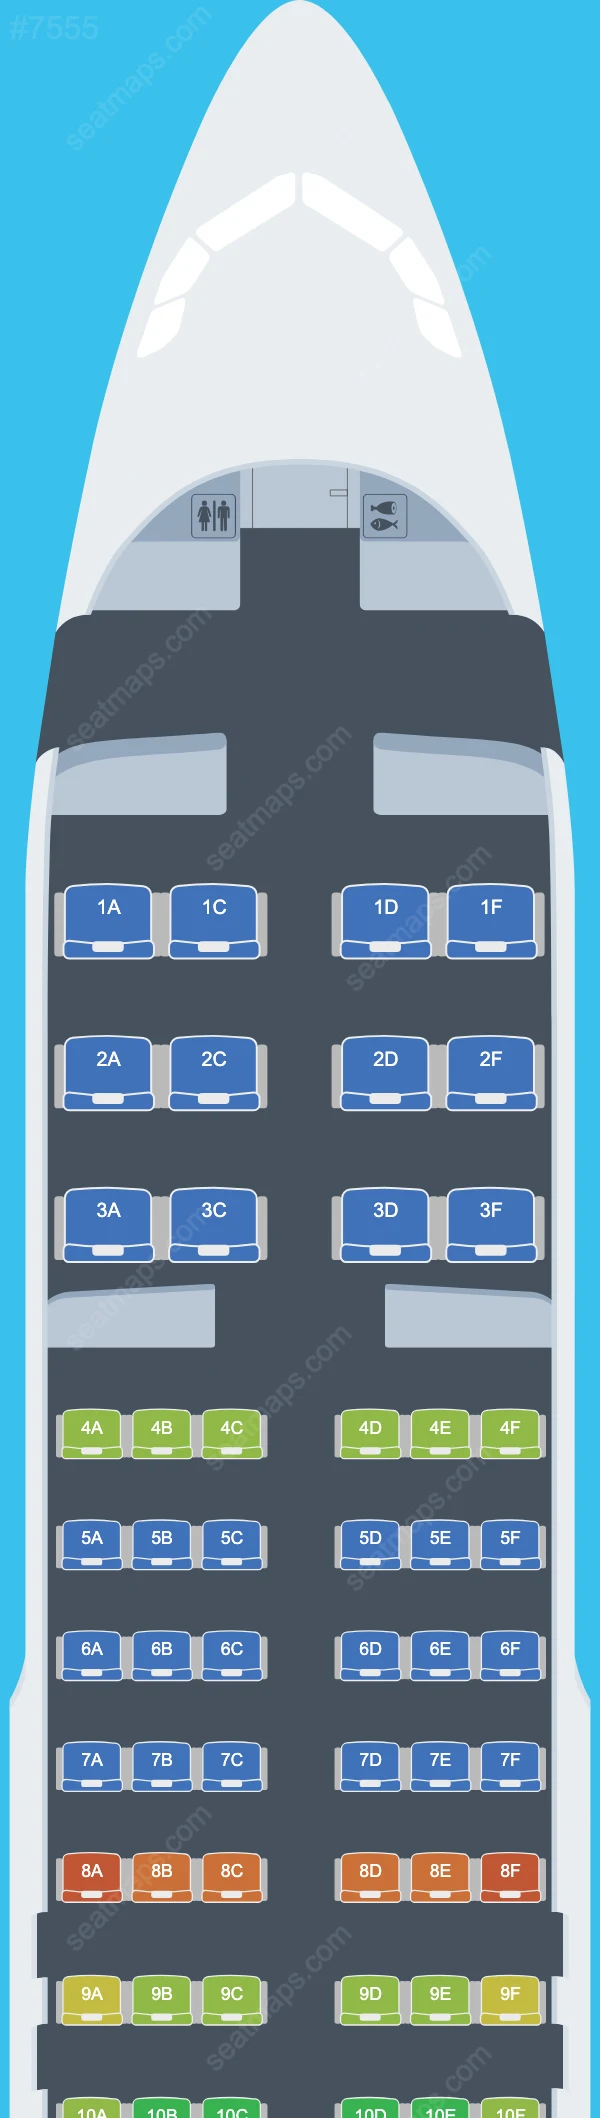 Solomon Airlines Airbus A320-200 seatmap preview